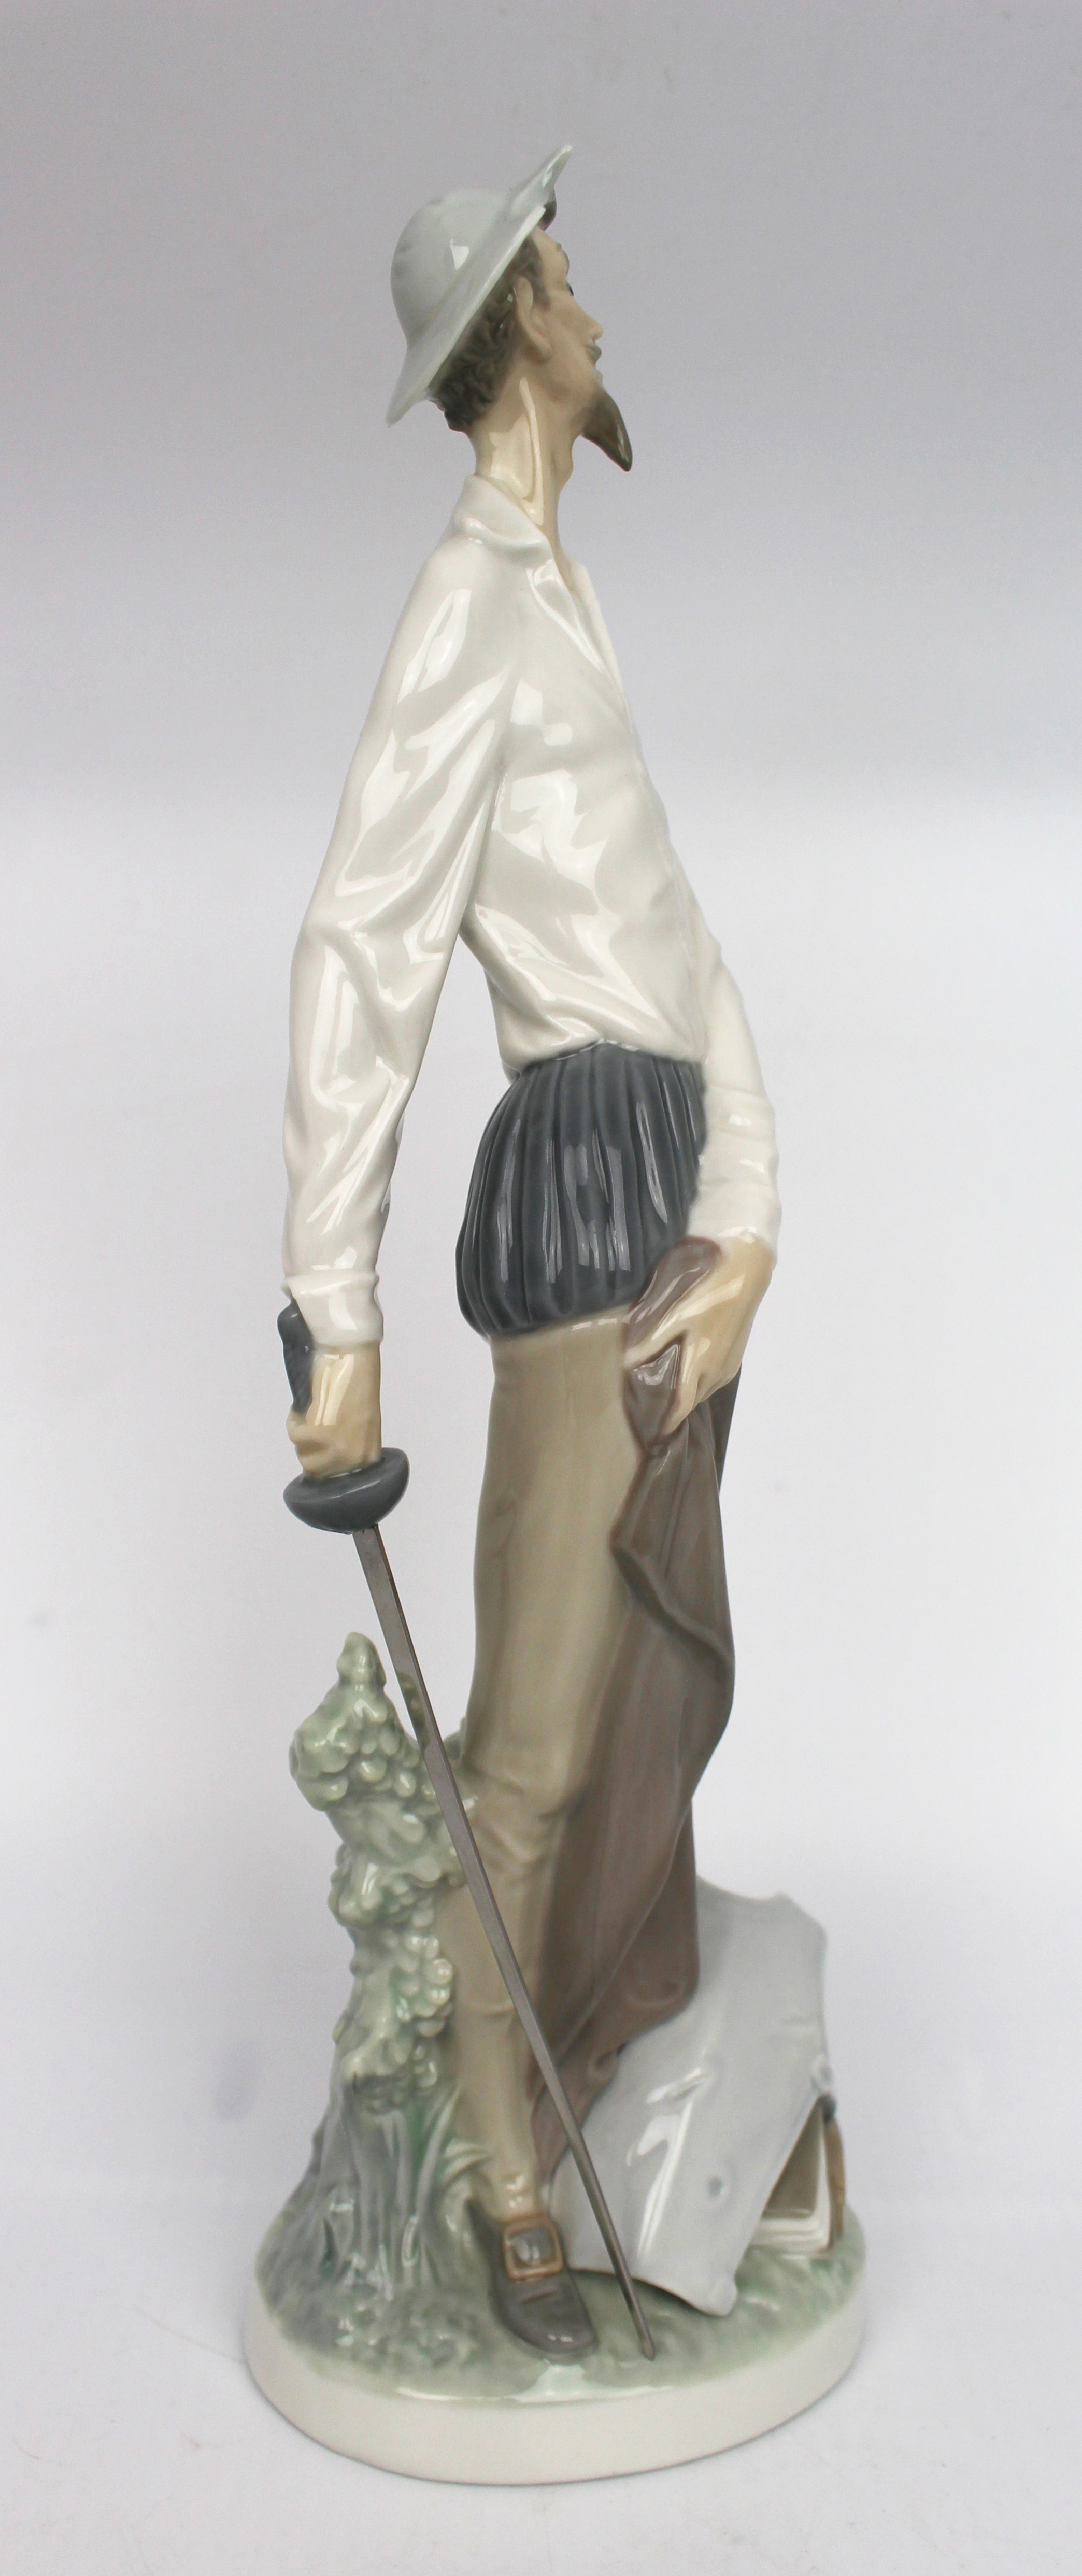 Lladro Figurine Cavalier with Sword Figurine - Image 3 of 6